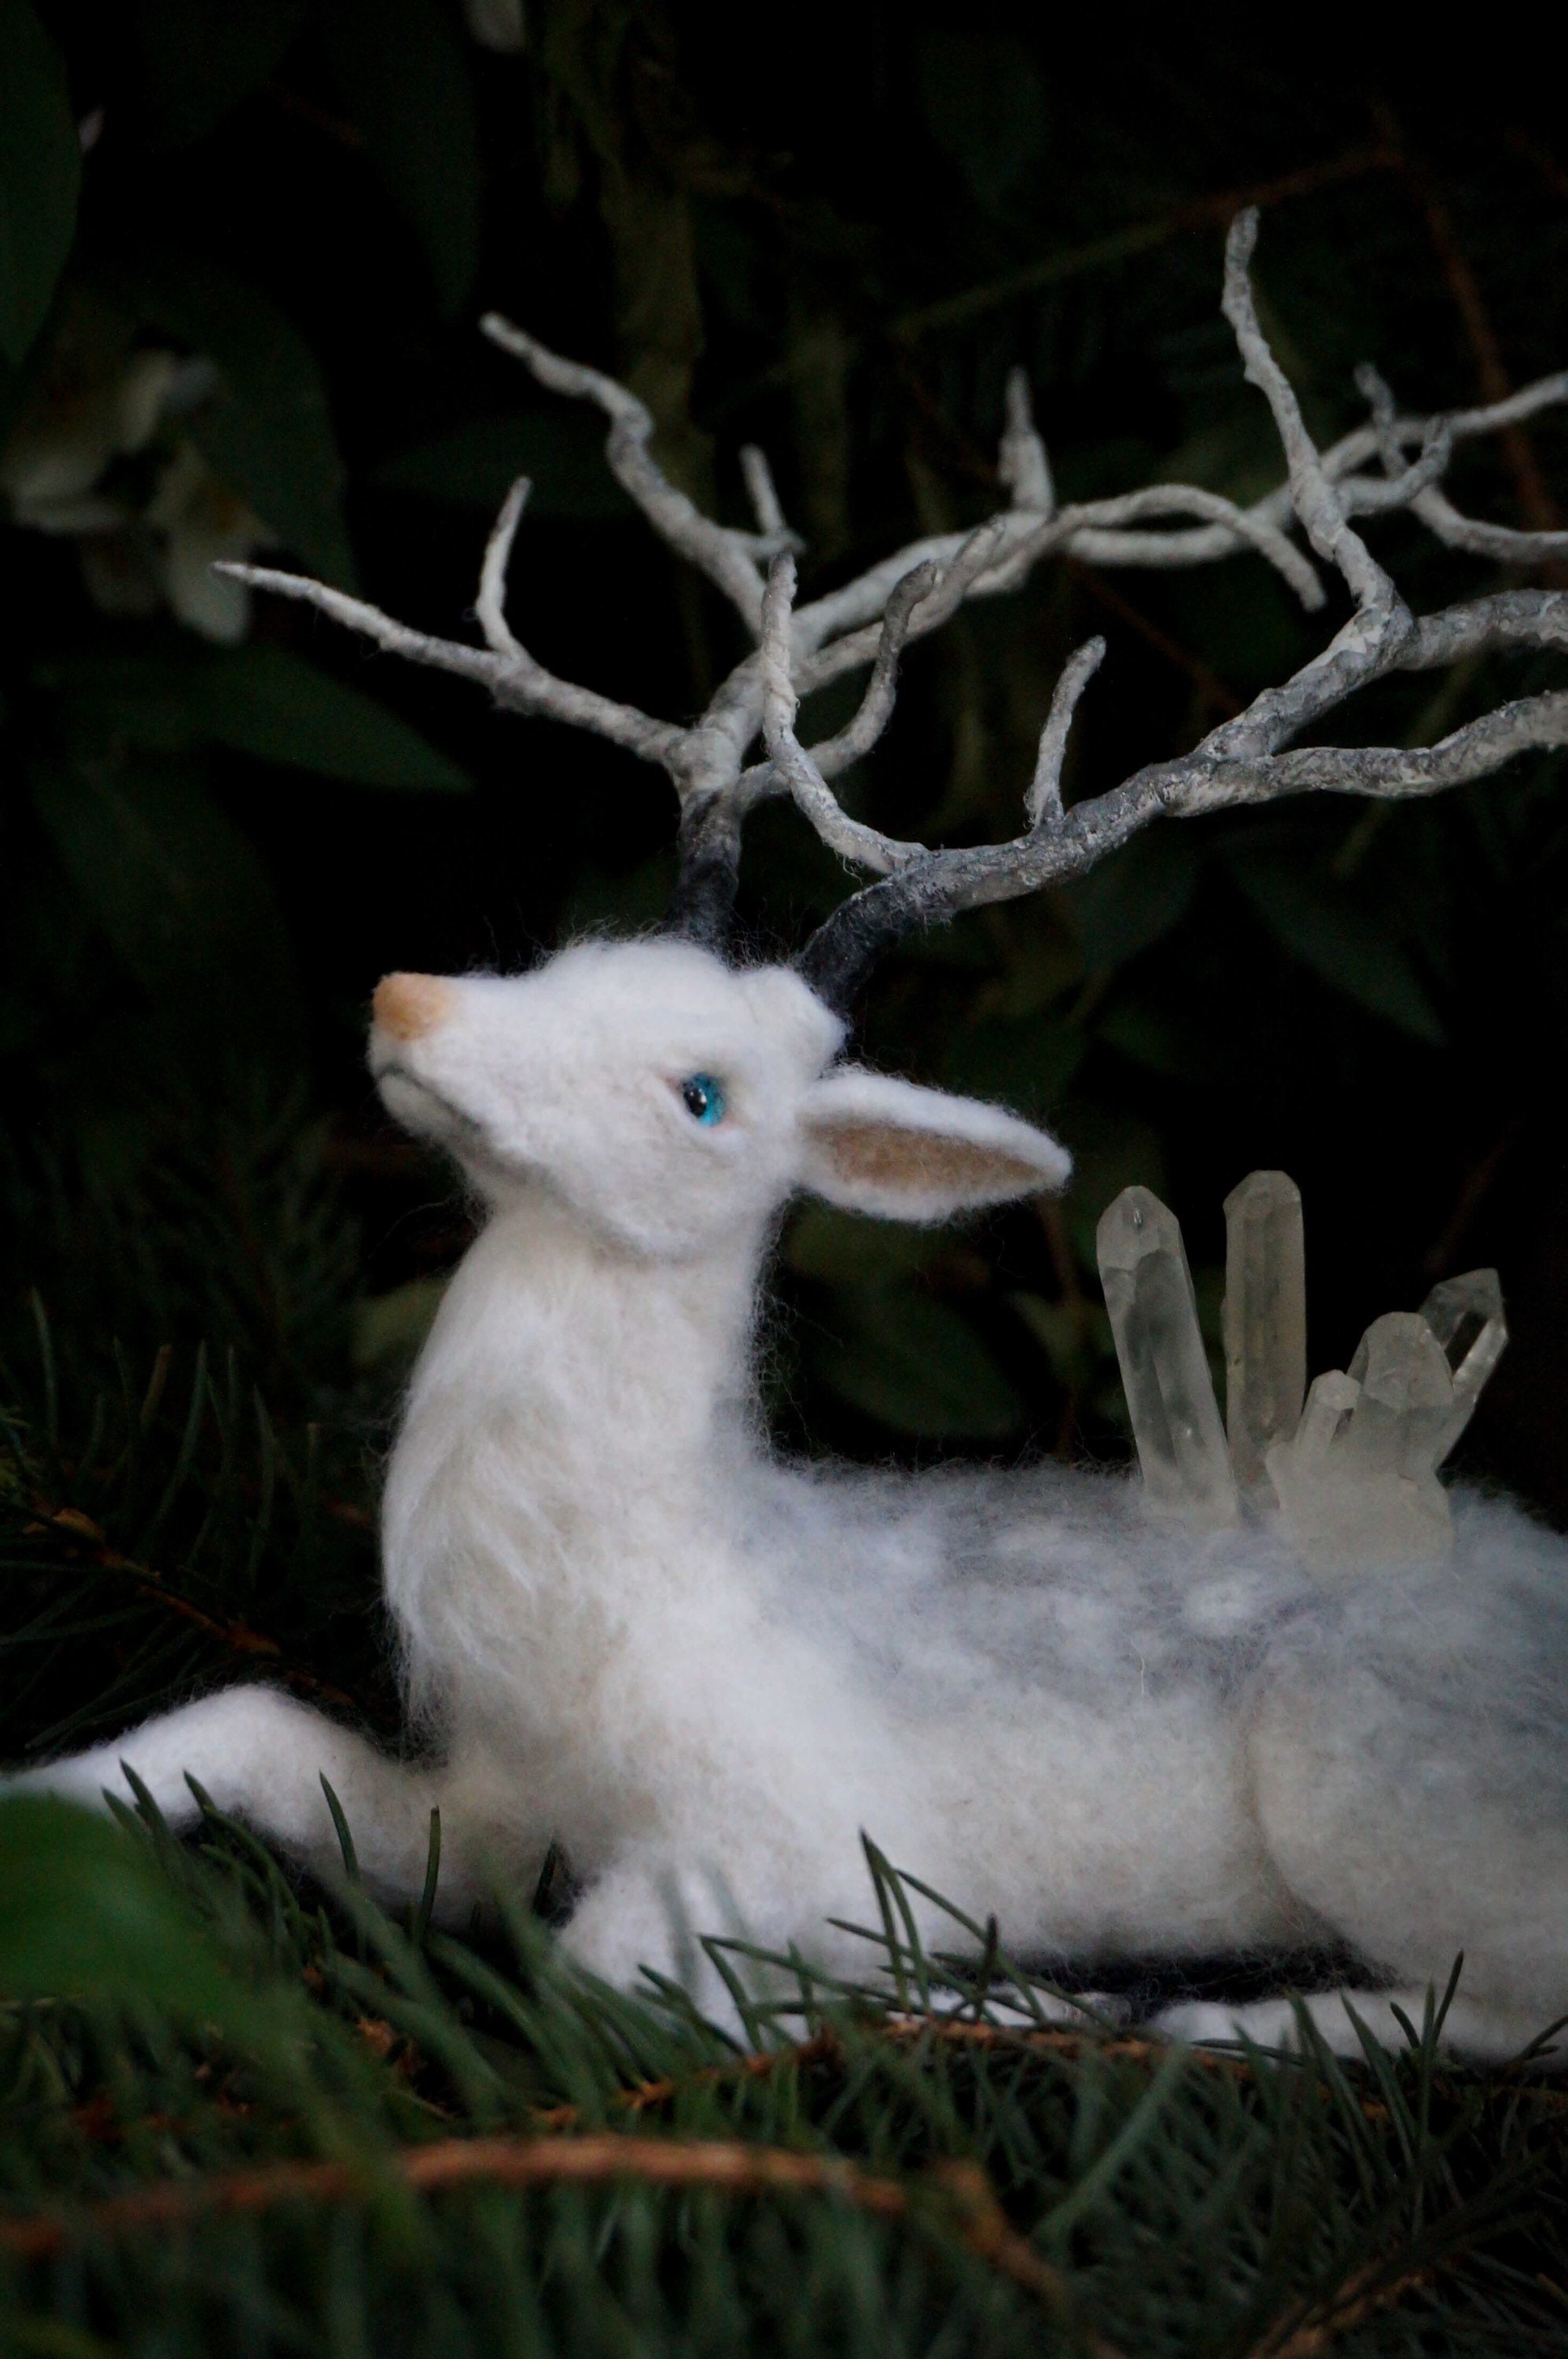 Cerf Figurines Jouets Kawaii Sleeping Animal Baby Decor Ornements